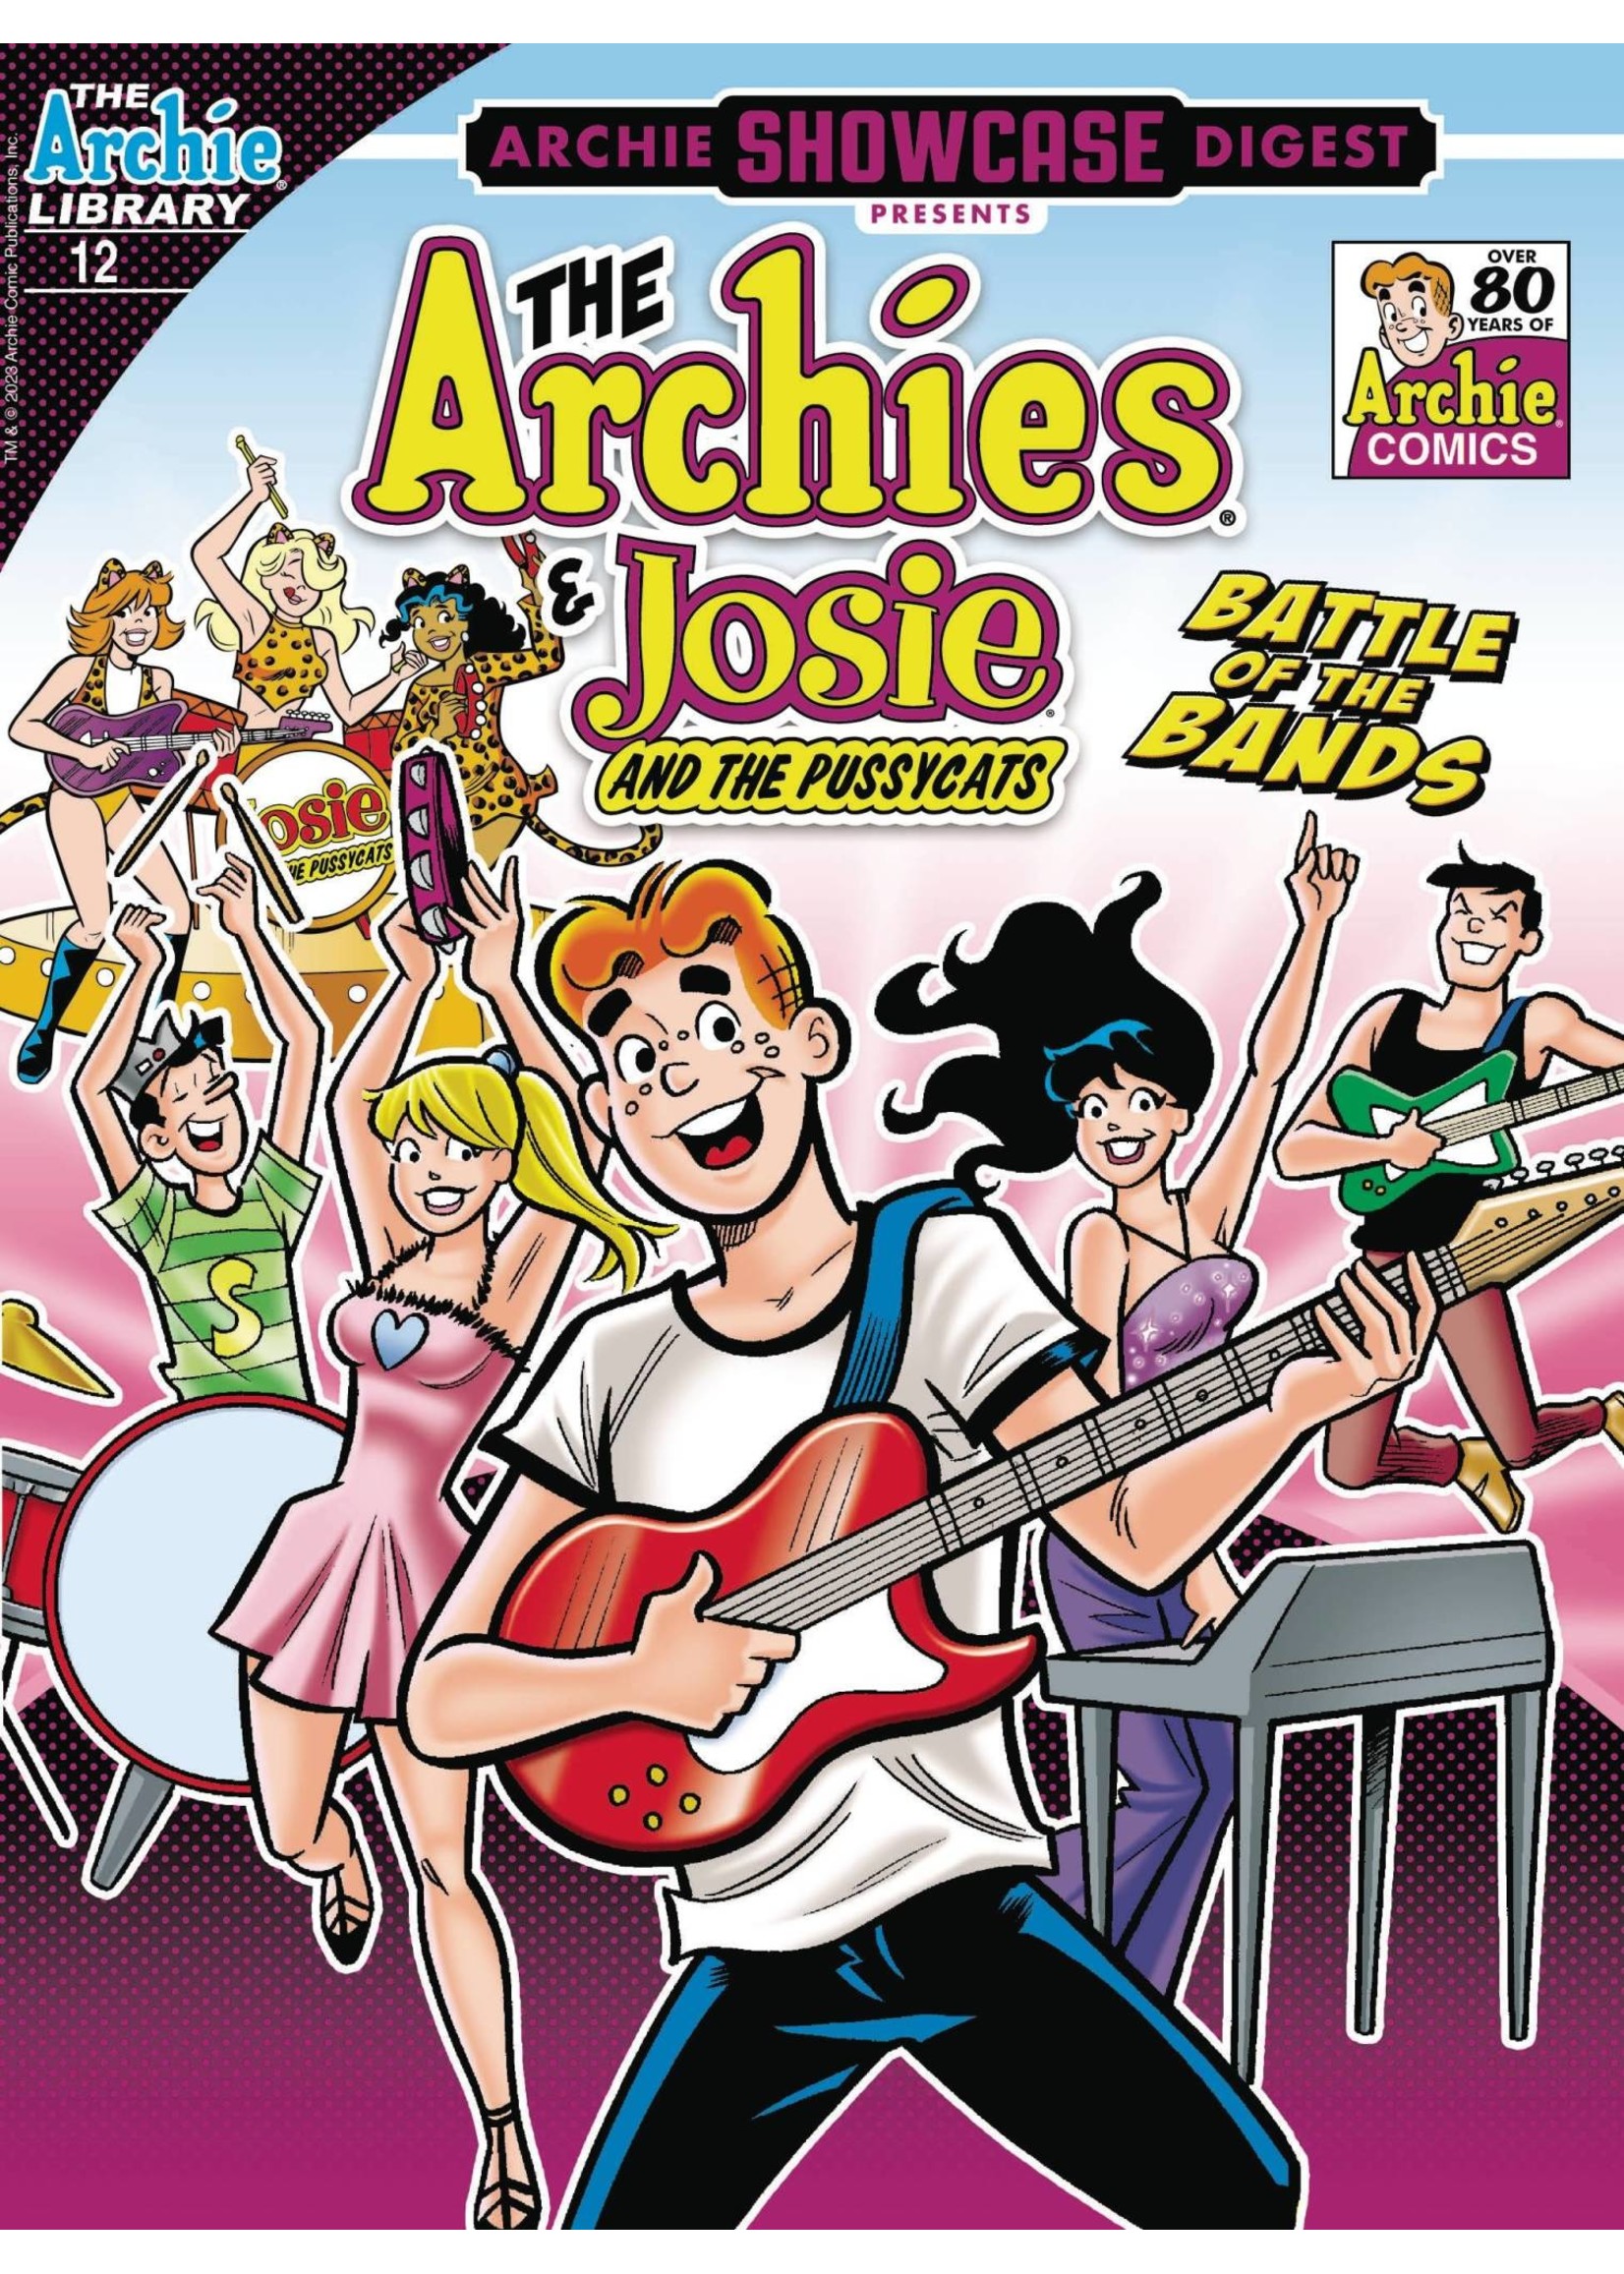 ARCHIE COMIC PUBLICATIONS ARCHIE SHOWCASE DIGEST #12 ARCHIES & JOSIE AND PUSSYCATS